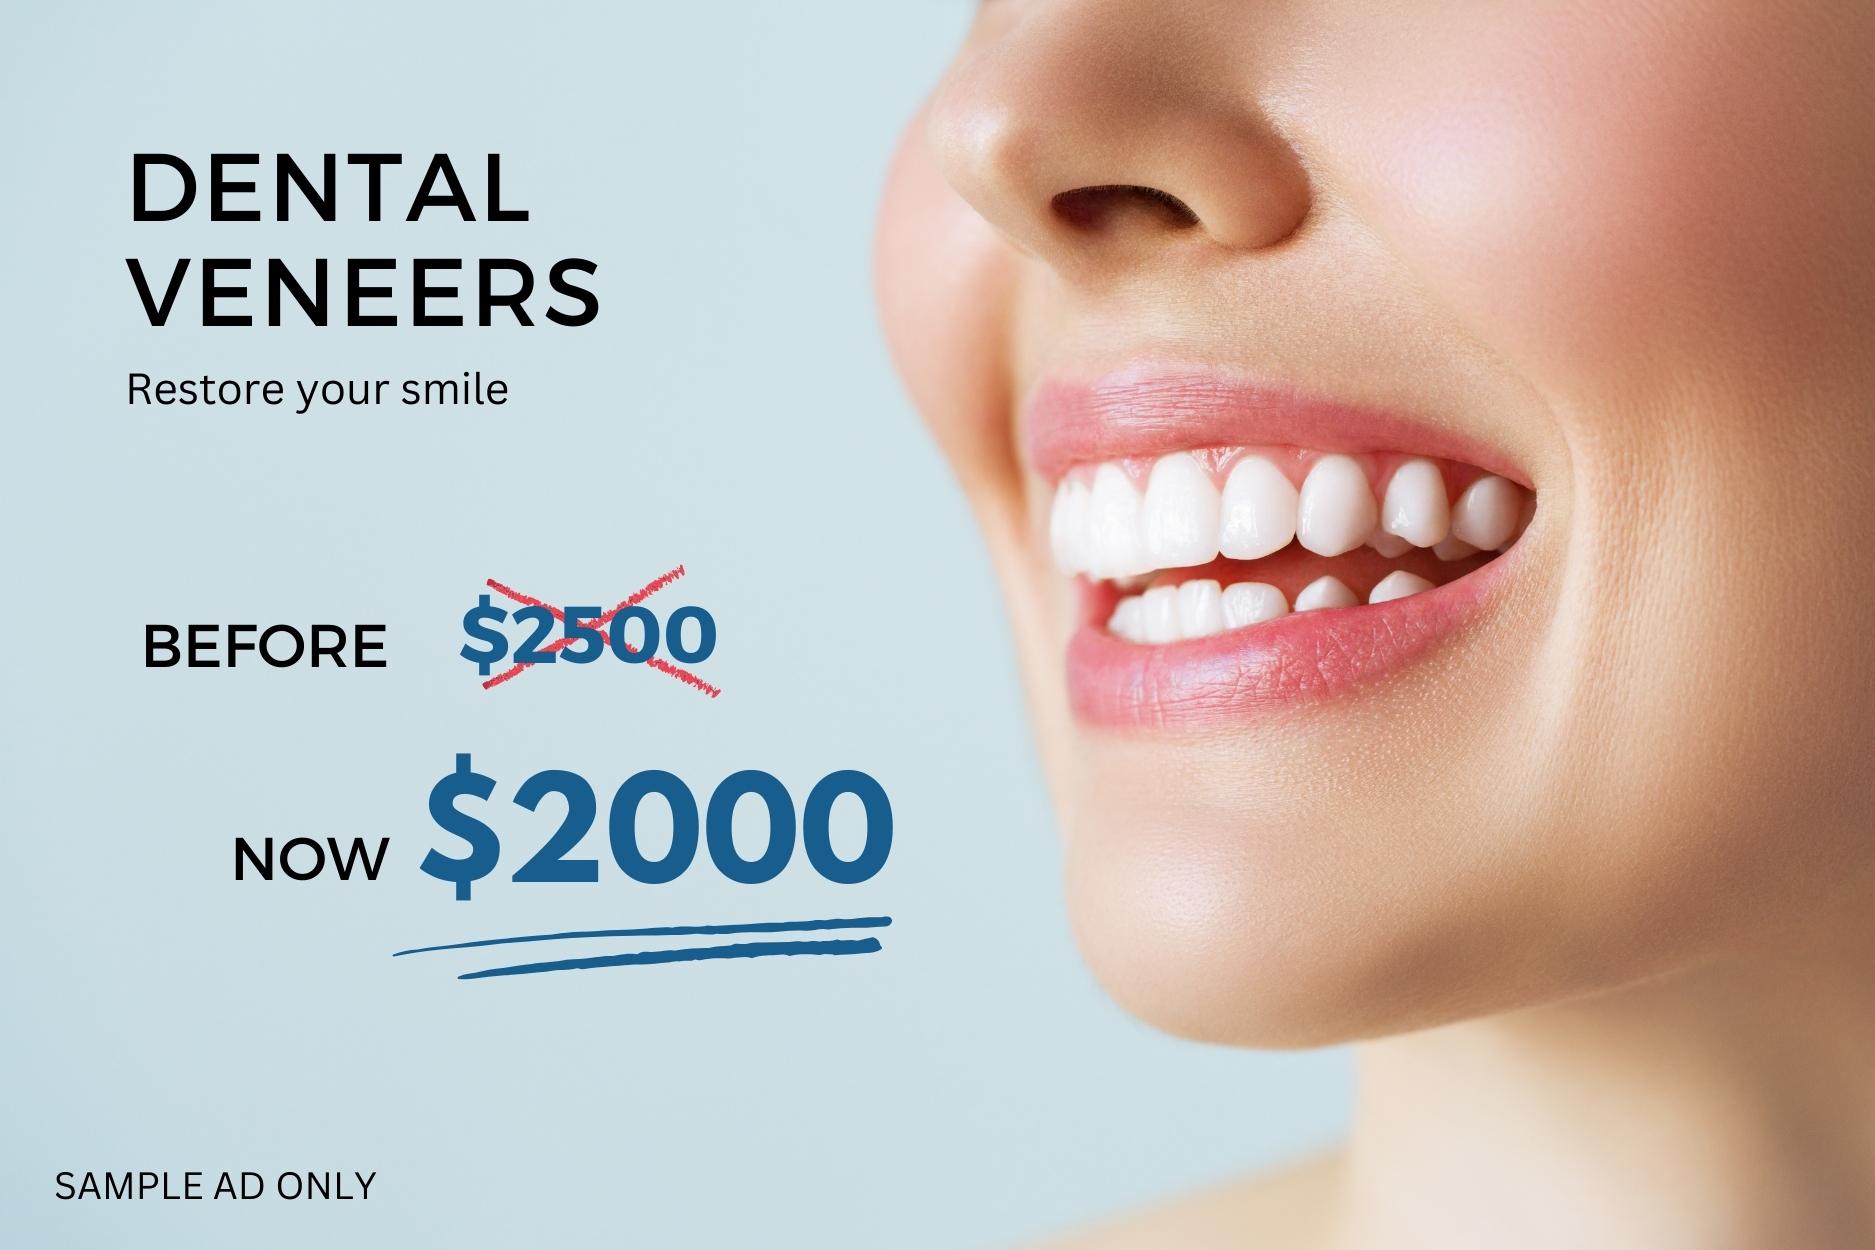 dental veneers sample ad with inflated price